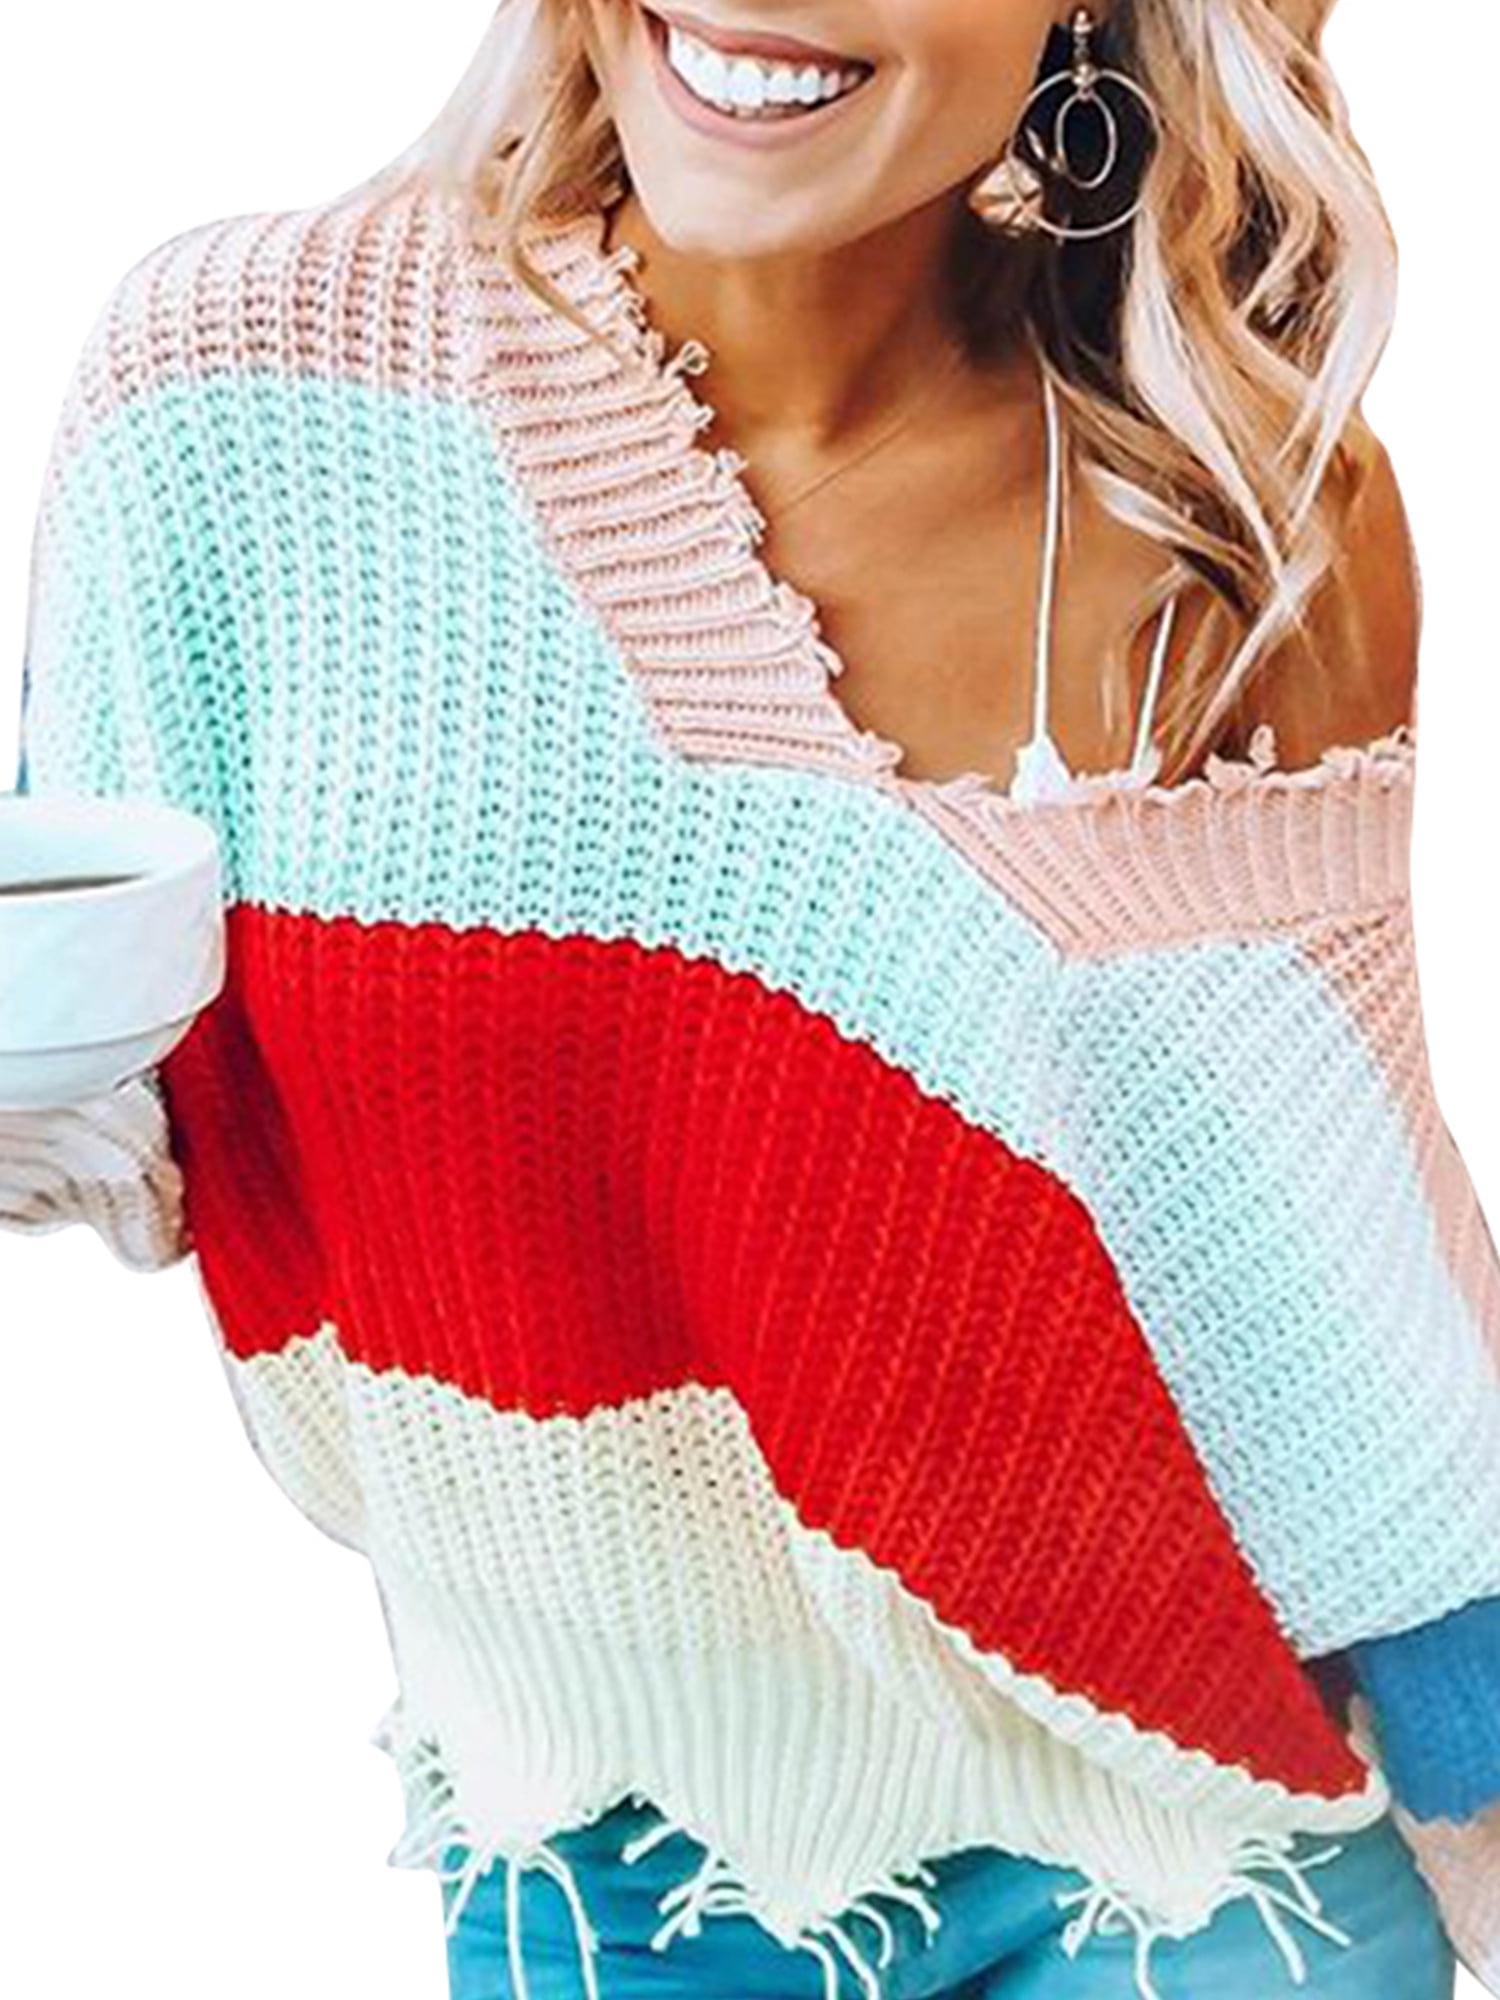 Mingfa Womens Teen Girls 2019 Fashion Hoodie Sweatshirt Crop Tops Letters Printed Long Sleeve Pullover Jumper Tops Blouse 